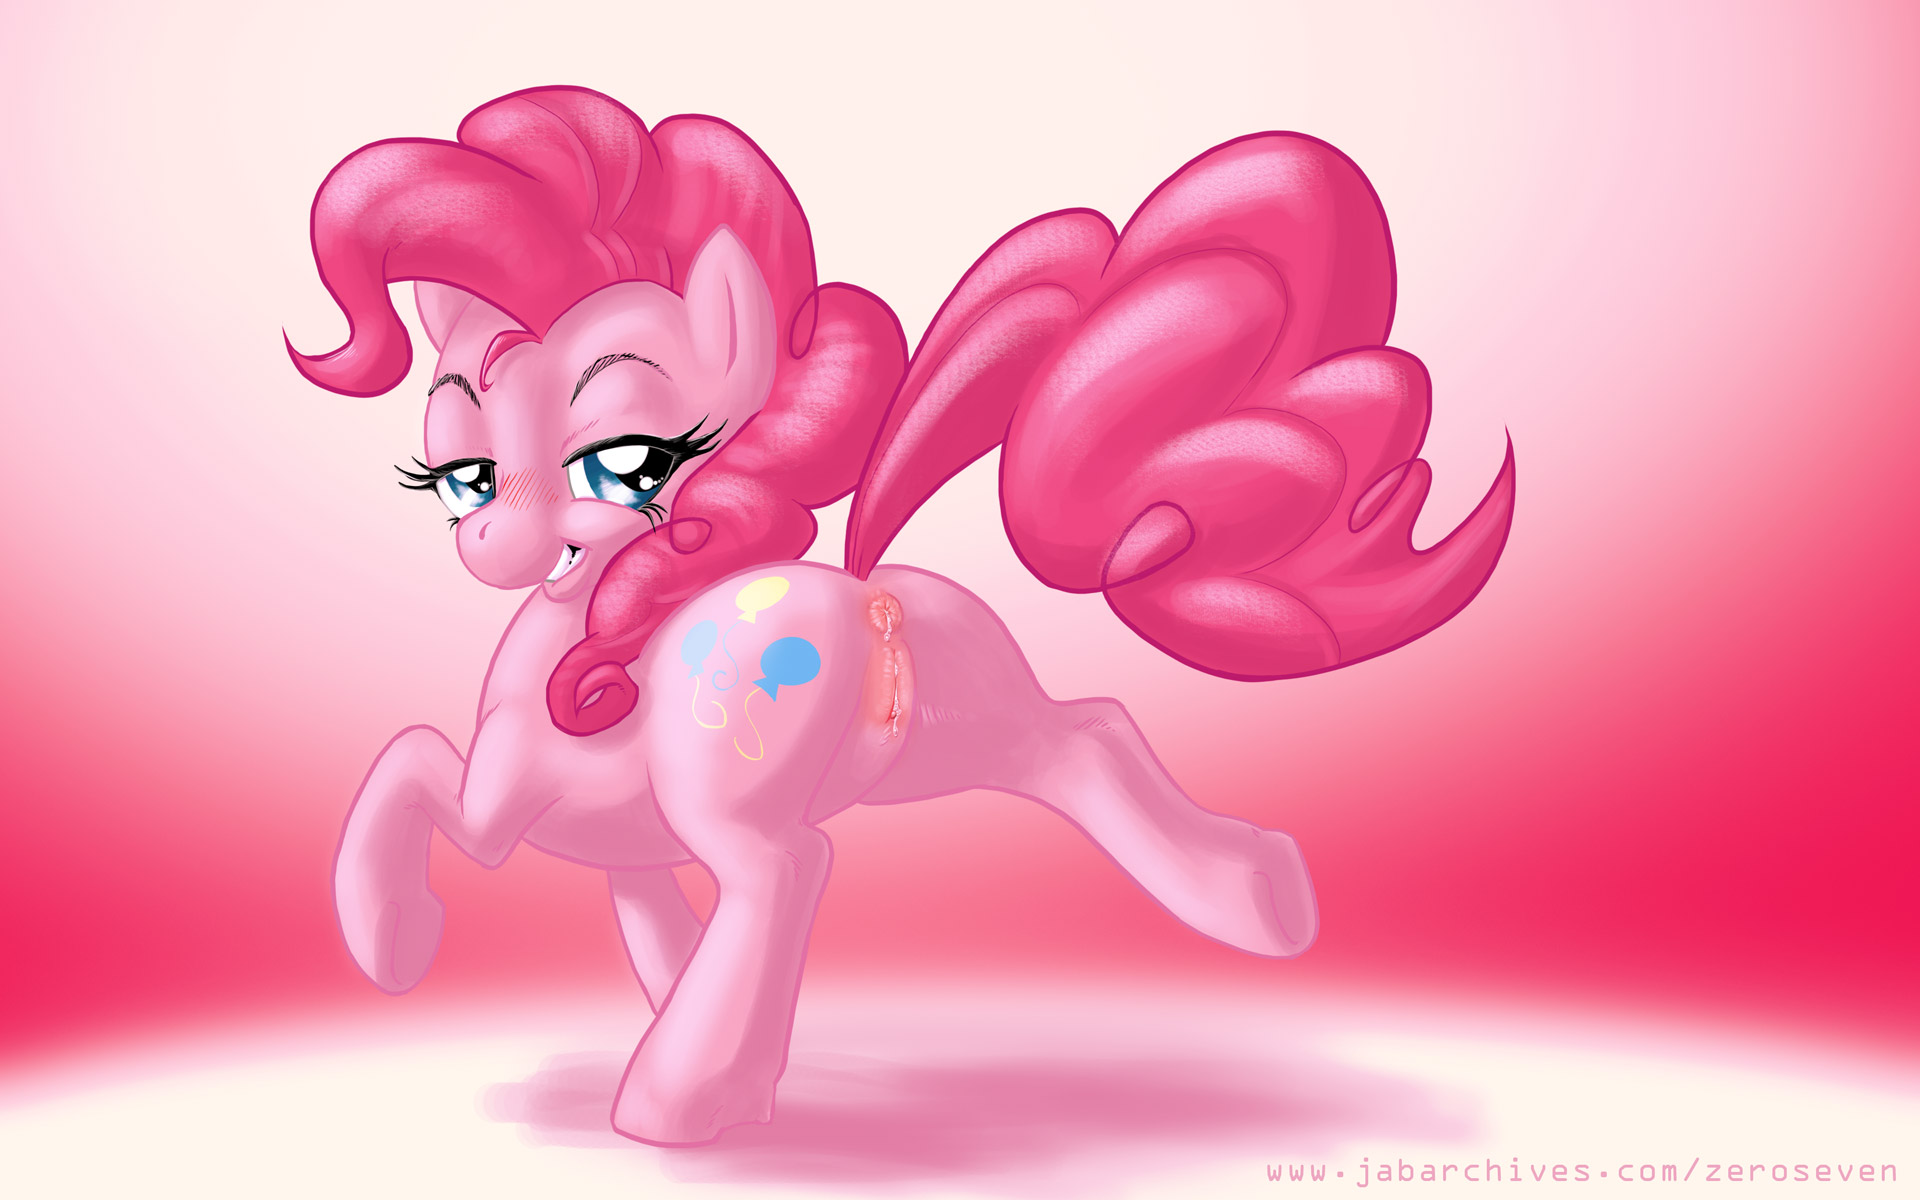 Pink Pony Design: Introducing: Pink Pony Design! 